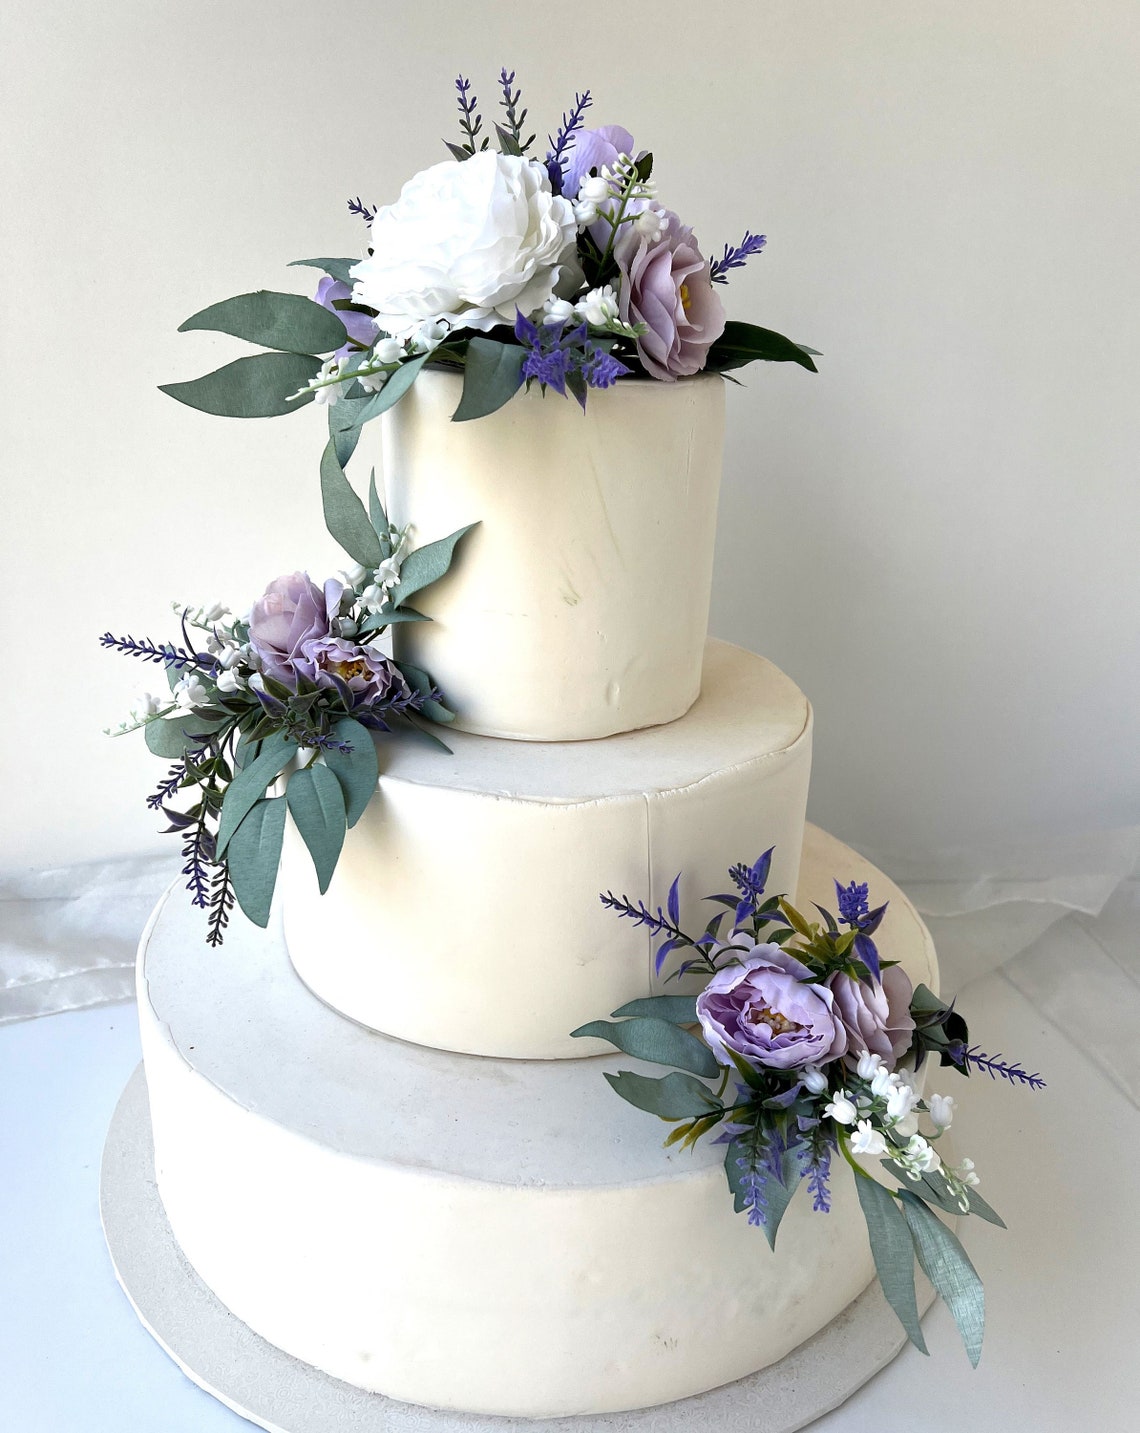 Cake Topper Arrangements Flowers Wedding Cake Decorations image 1